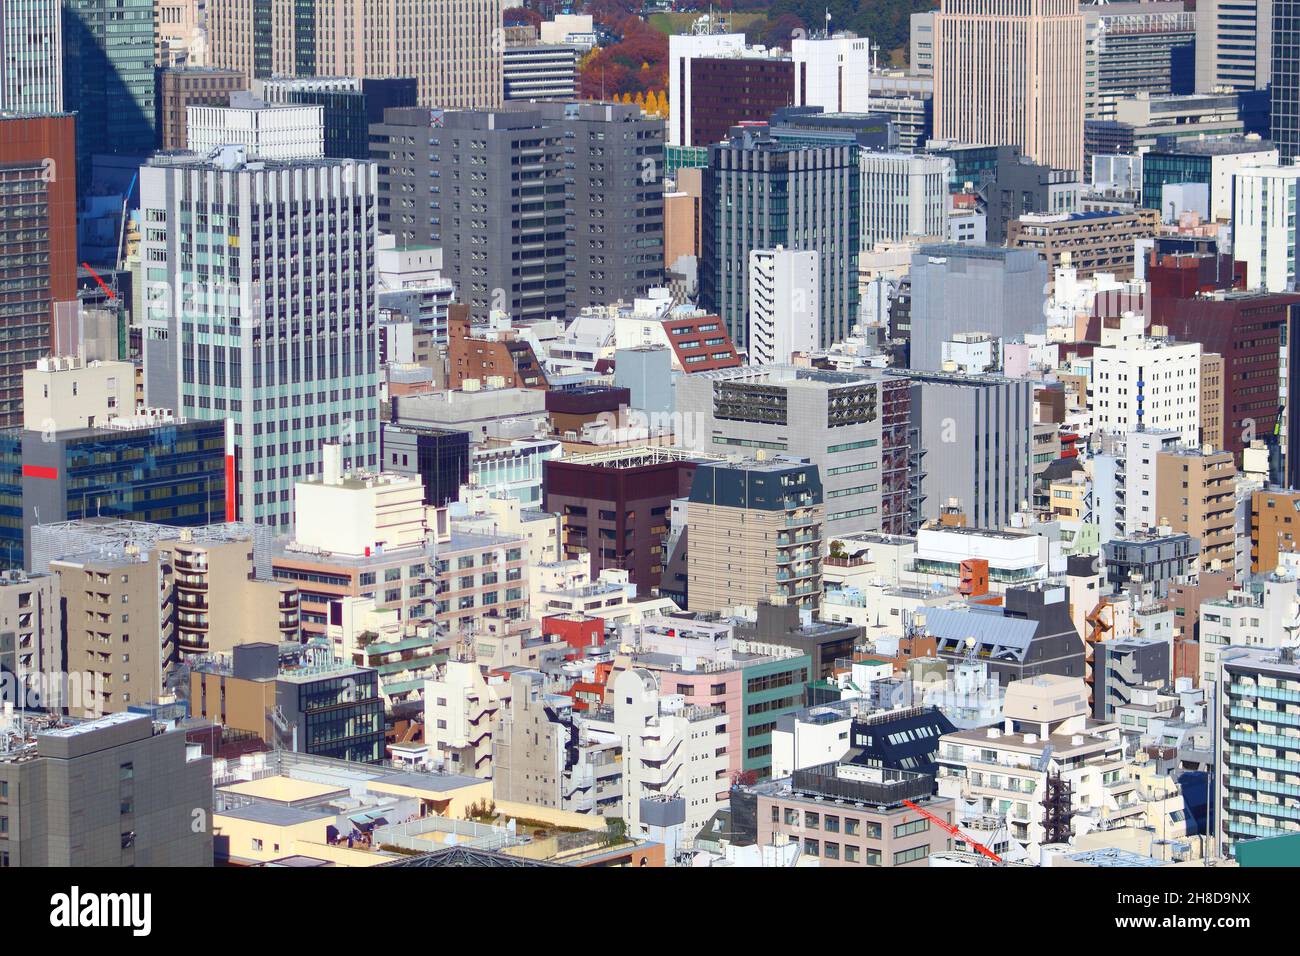 Tokyo skyline. Tokyo city in Japan - cityscape view with Nishishinbashi district of Minato ward. Stock Photo